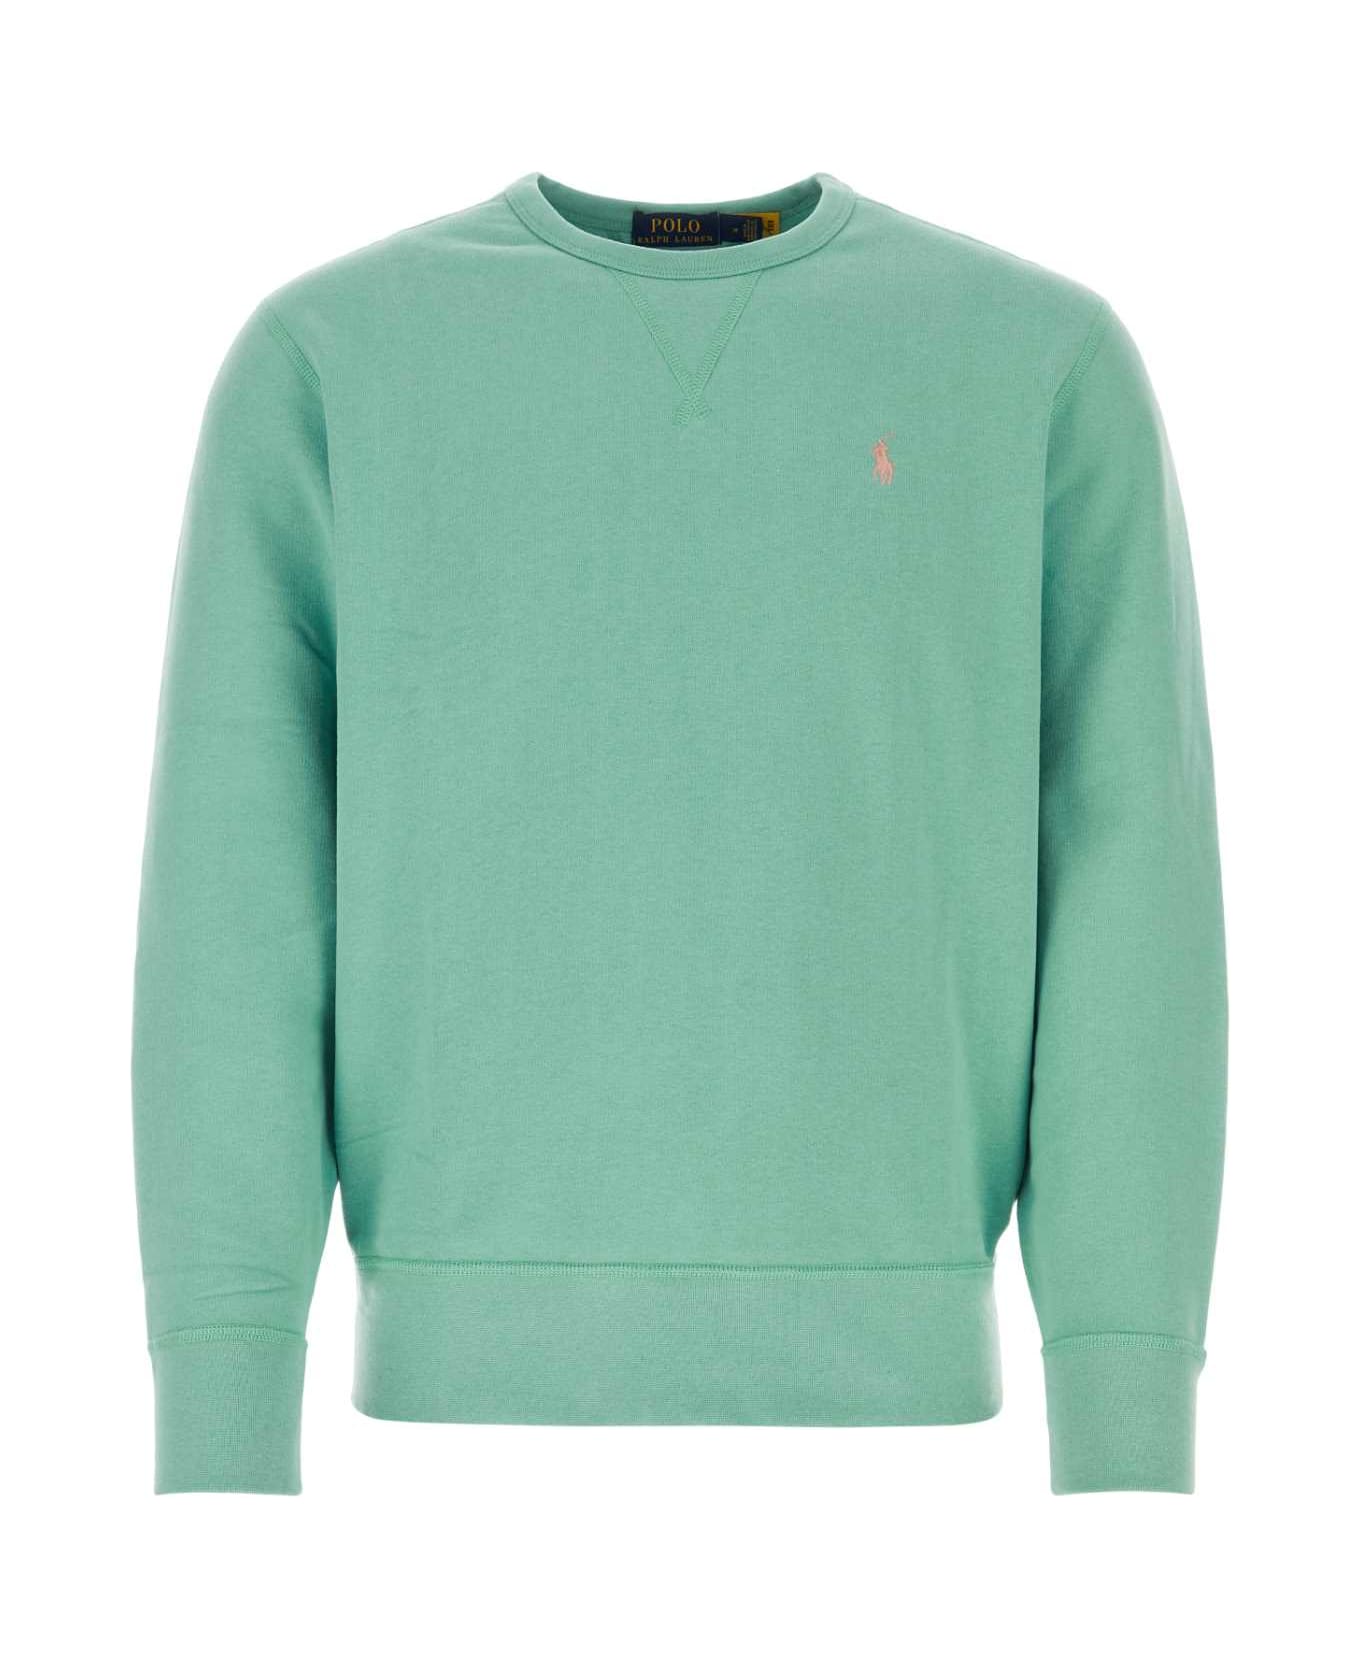 Polo Ralph Lauren Pastel Green Cotton Blend Sweatshirt - ESSEXGREEN